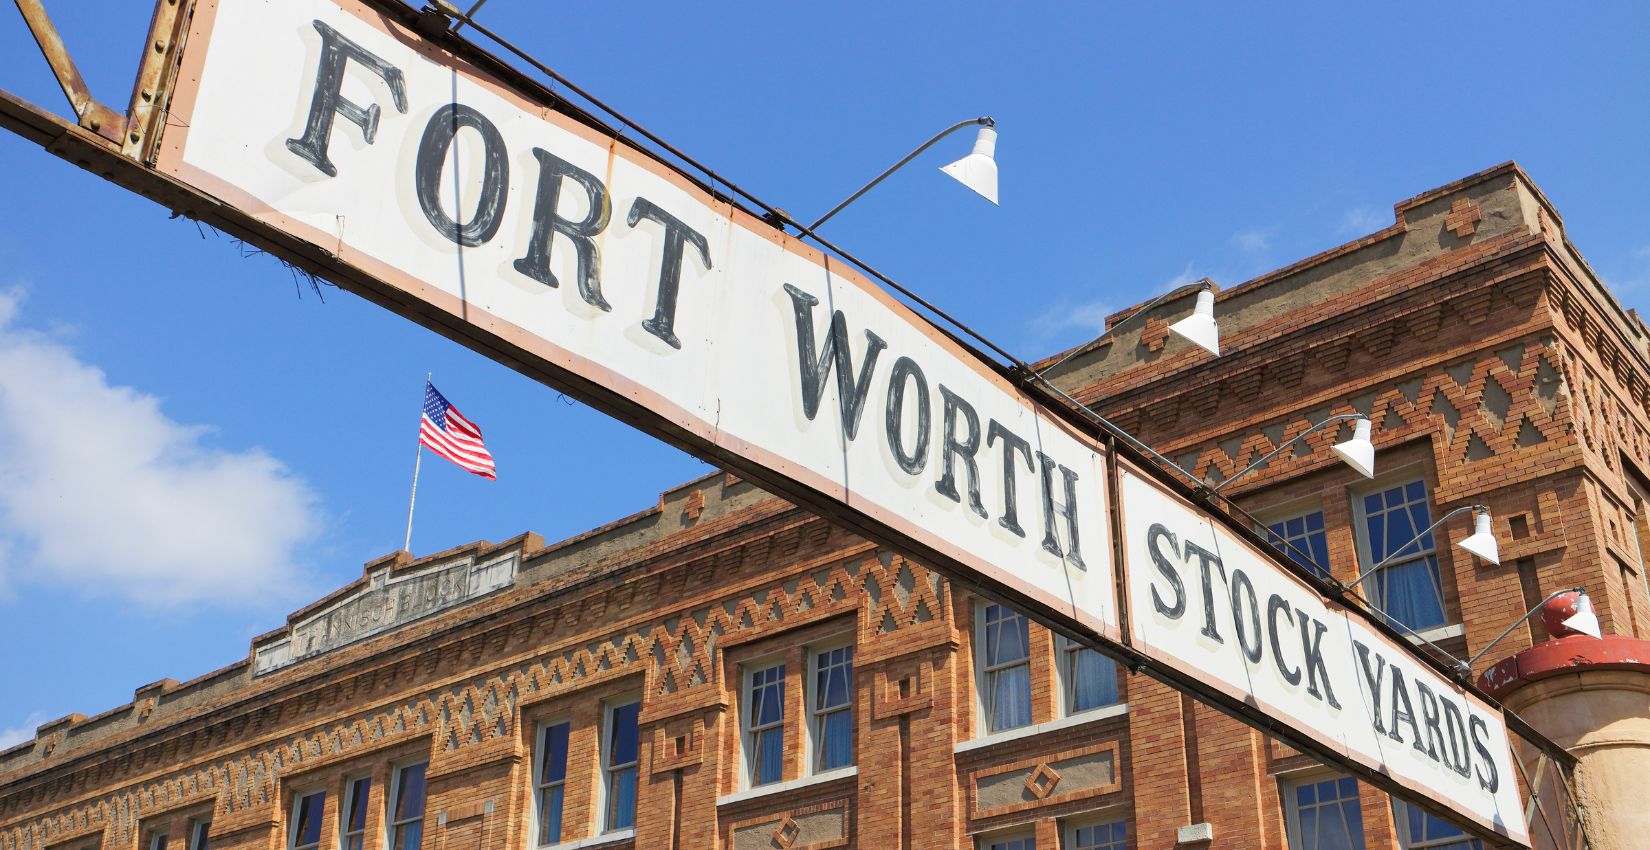 Fort Worth Stock Yard 